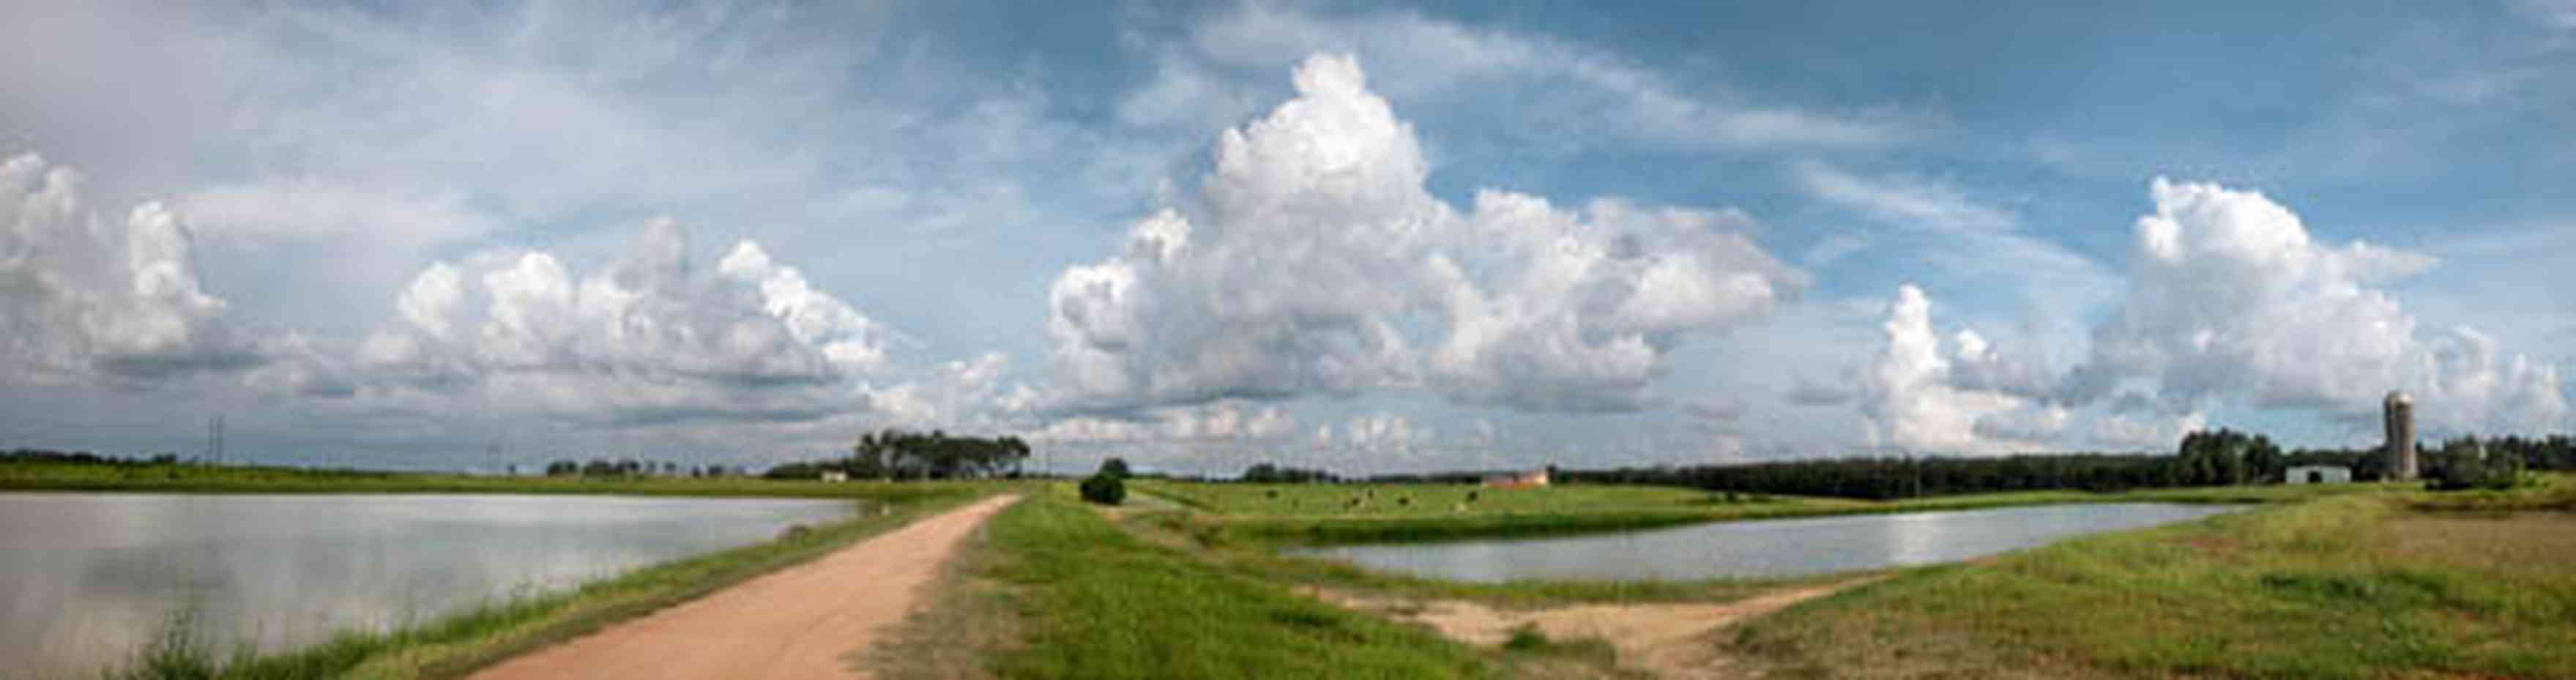 Walnut-Hill:-Kansas-Road:-Dairy-Farm_00.jpg:  catfish ponds, levee, dirt road, country road, silo, dairy farm, cows, cumulus clouds